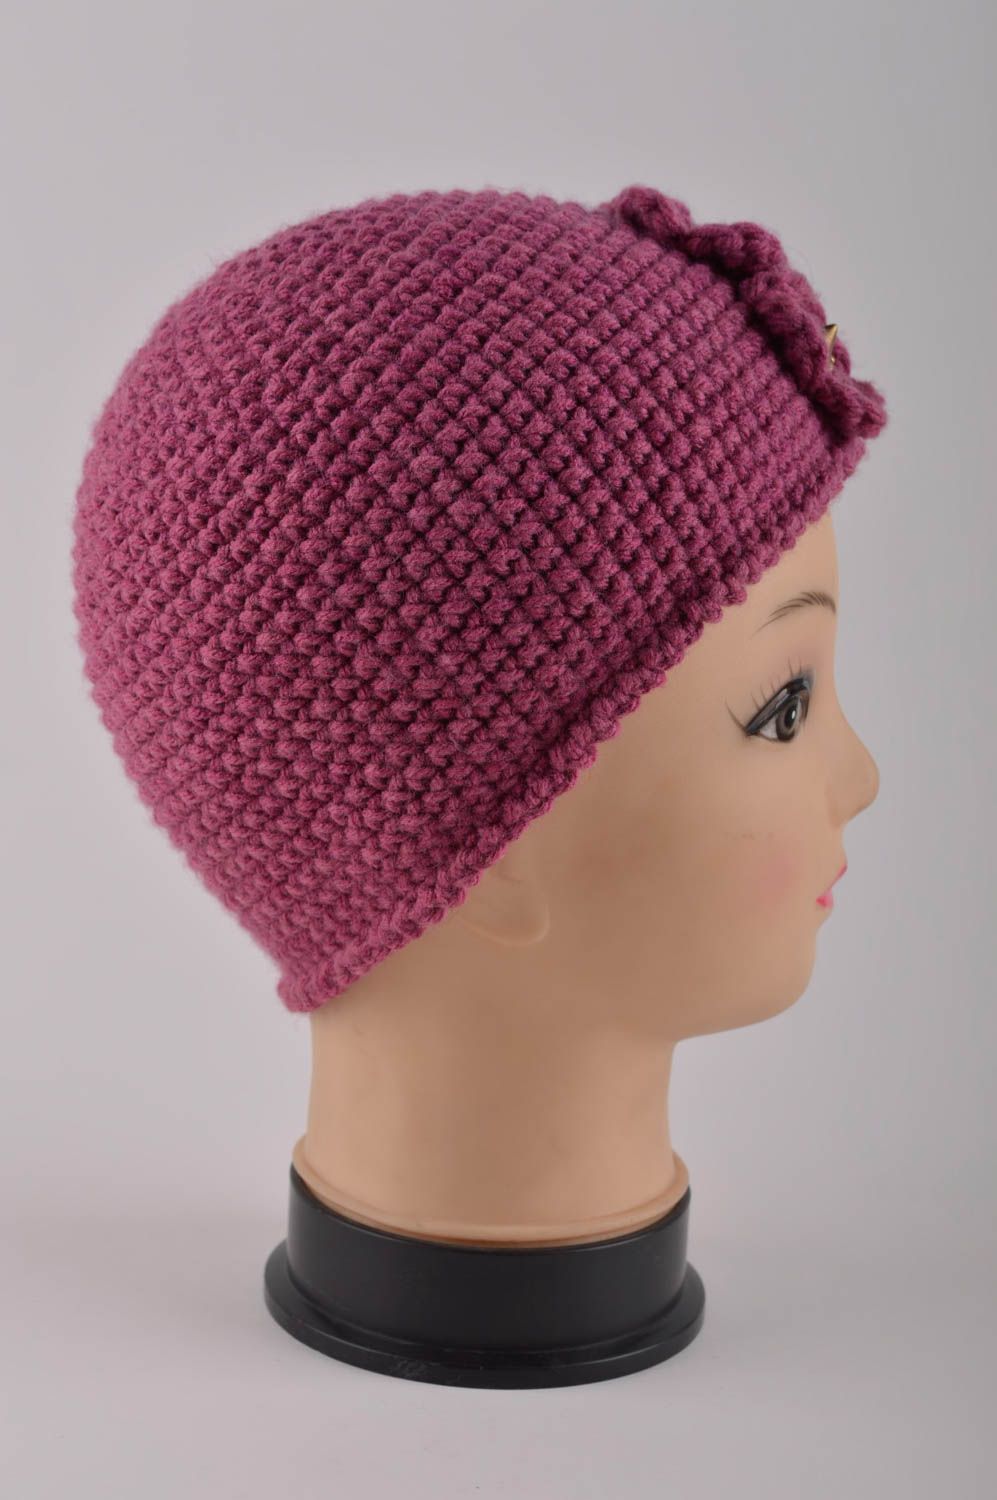 Handmade ladies hat designer accessories winter hats for women gifts for girls photo 4